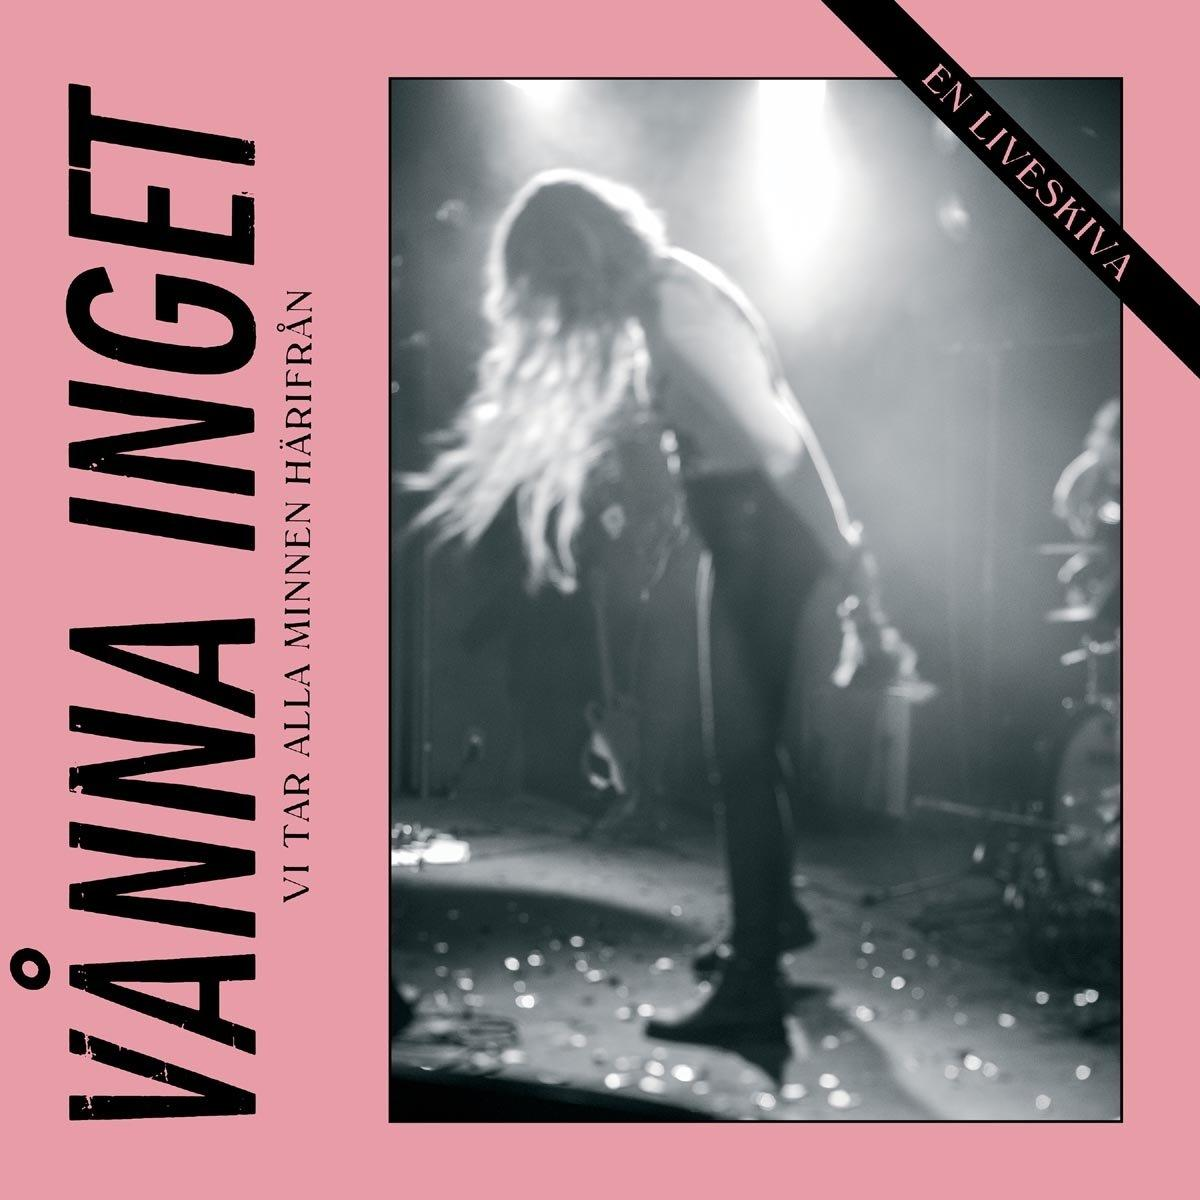 Vinyl) Ar (White - Alla Inget VI - Vanna Minnen (Live) (Vinyl) Härifran